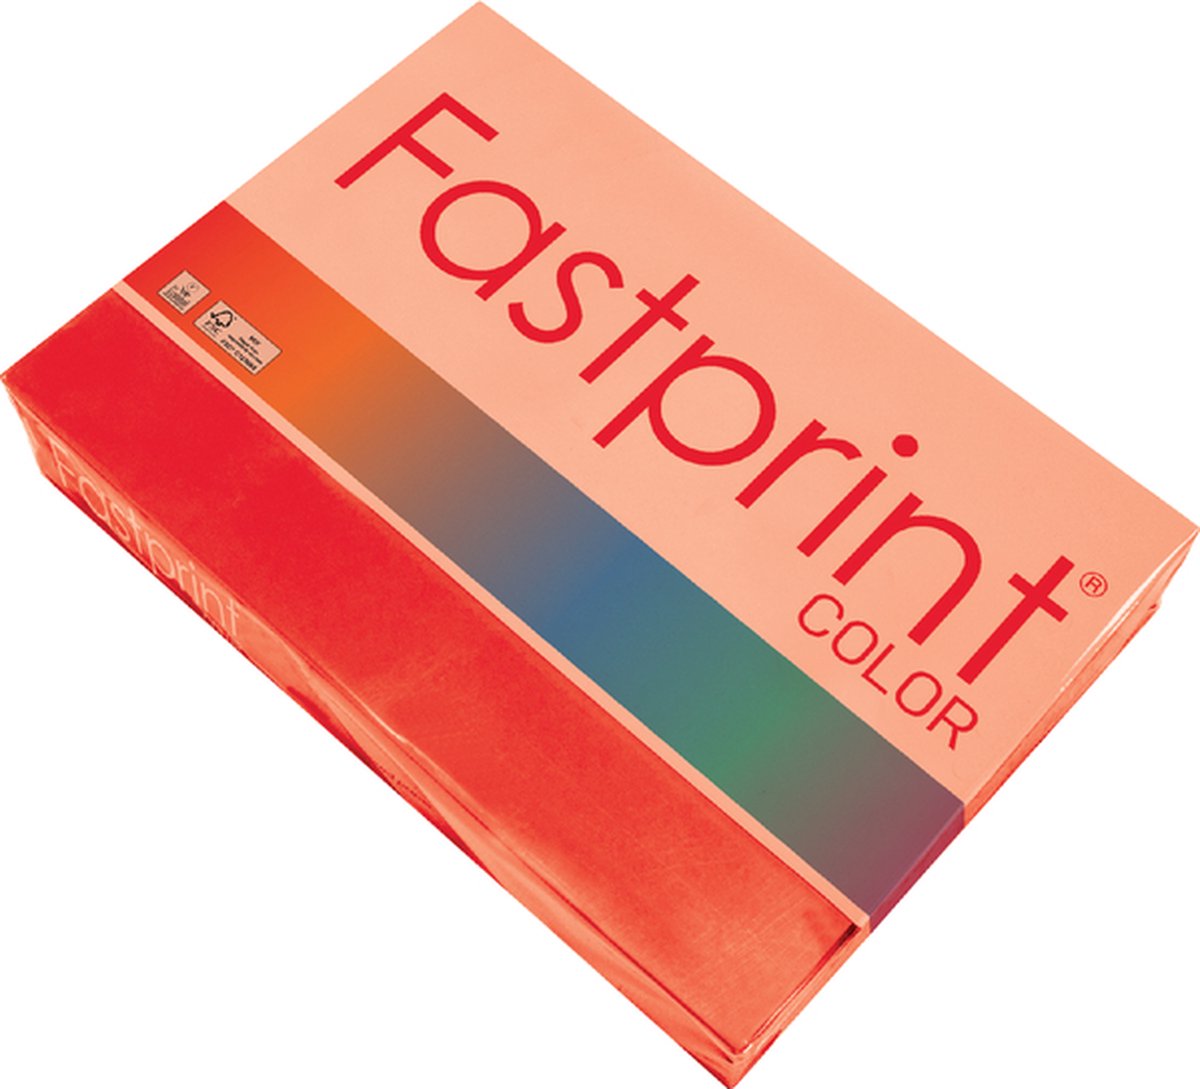 Kopieerpapier Fastprint A4 120gr felrood 250vel - 5 stuks